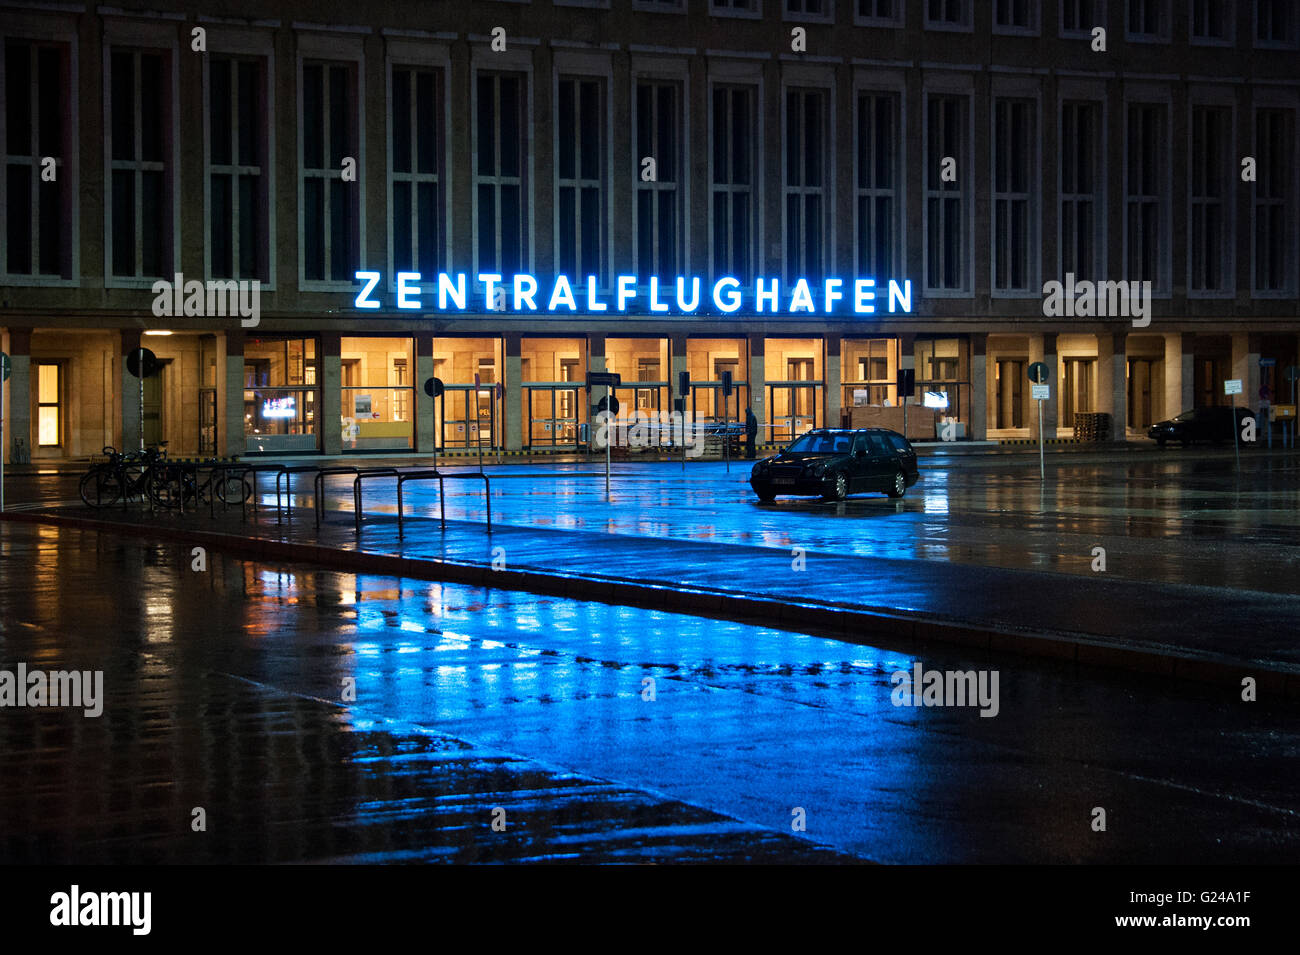 Zentralflughafen, Tempelhof Airport, Berlin, Germany Stock Photo